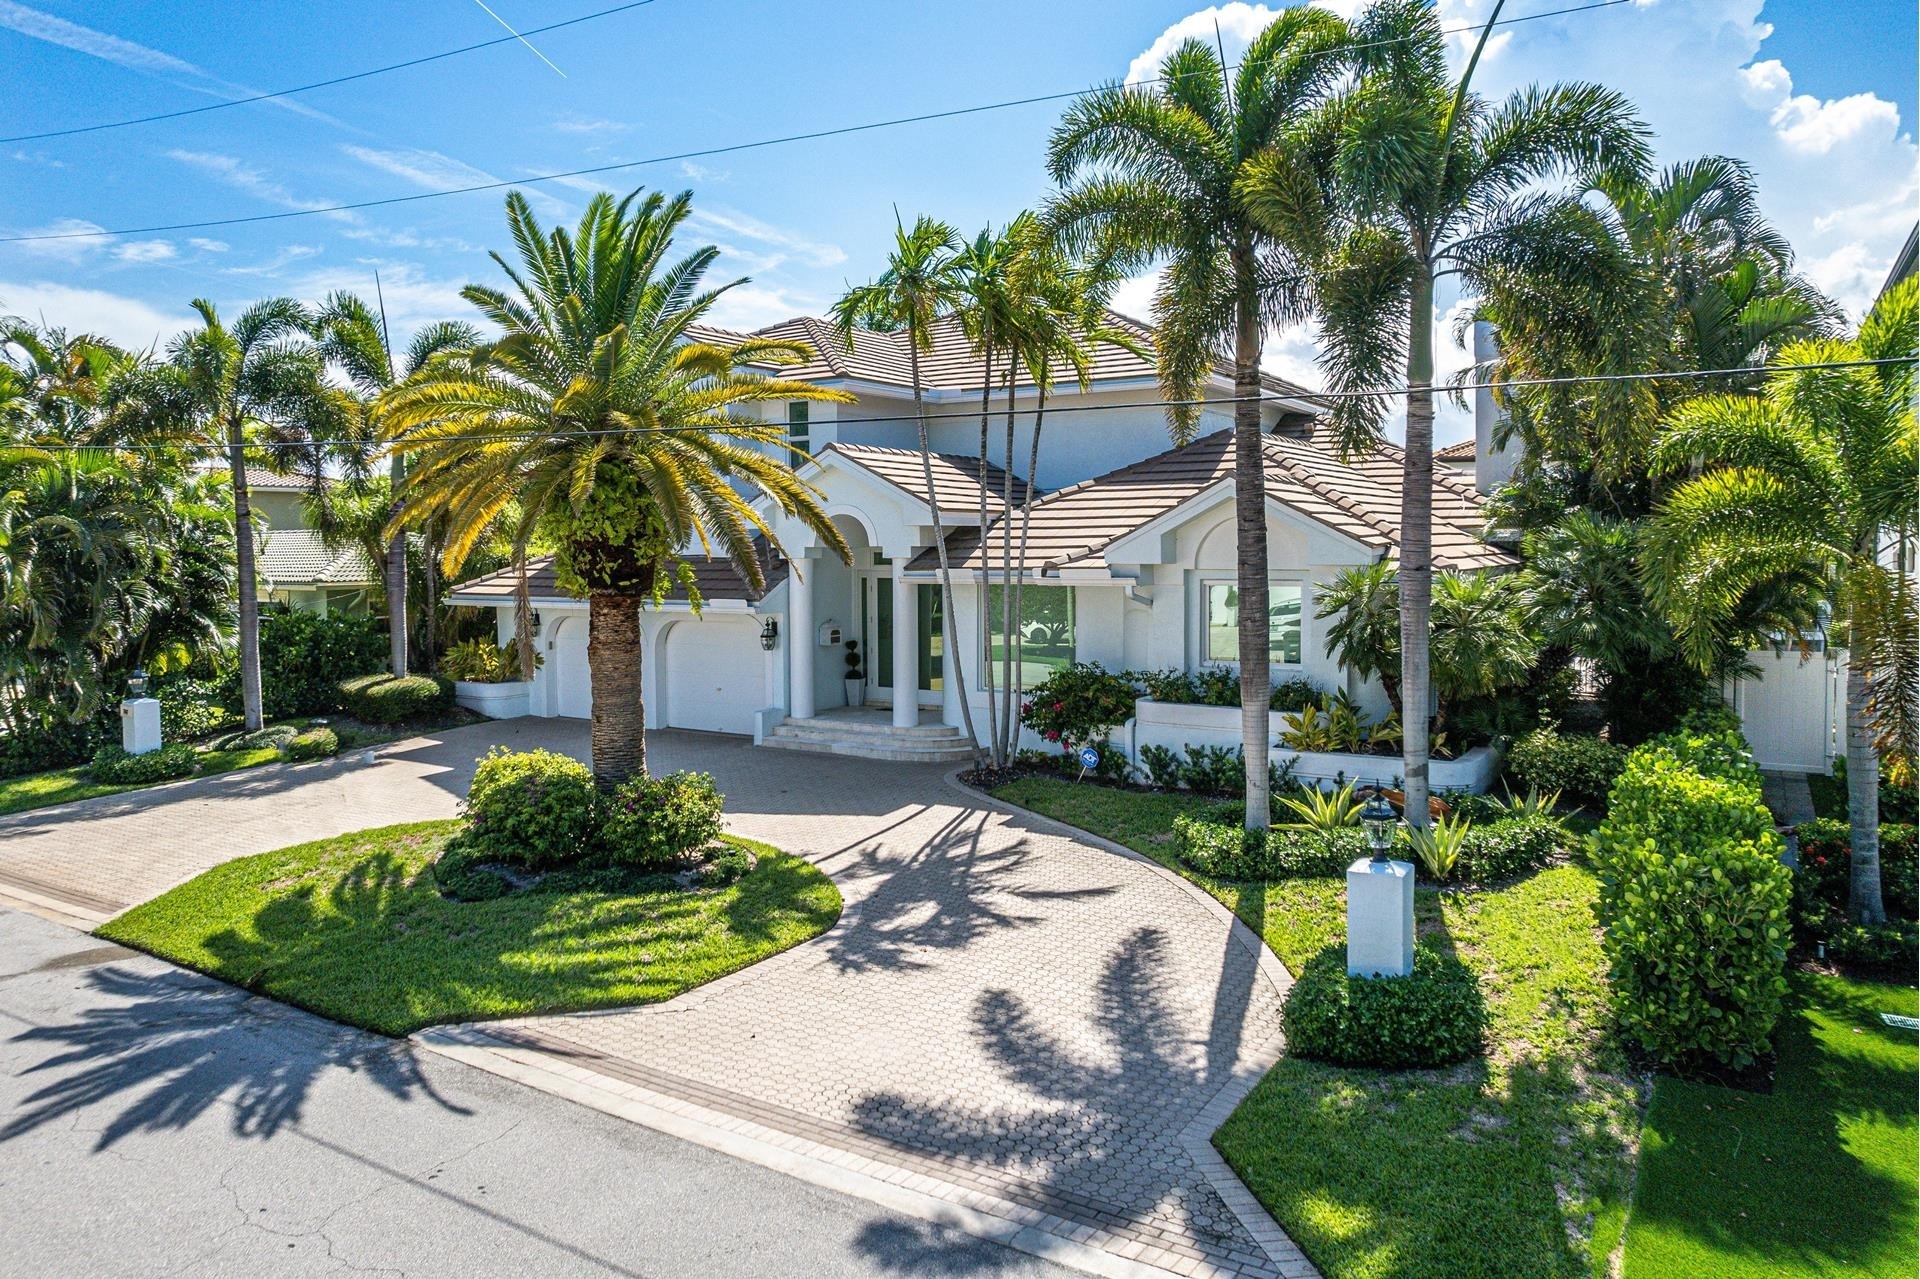 Single Family Home for Sale at Northeast Boca Raton, Boca Raton, Florida 33431